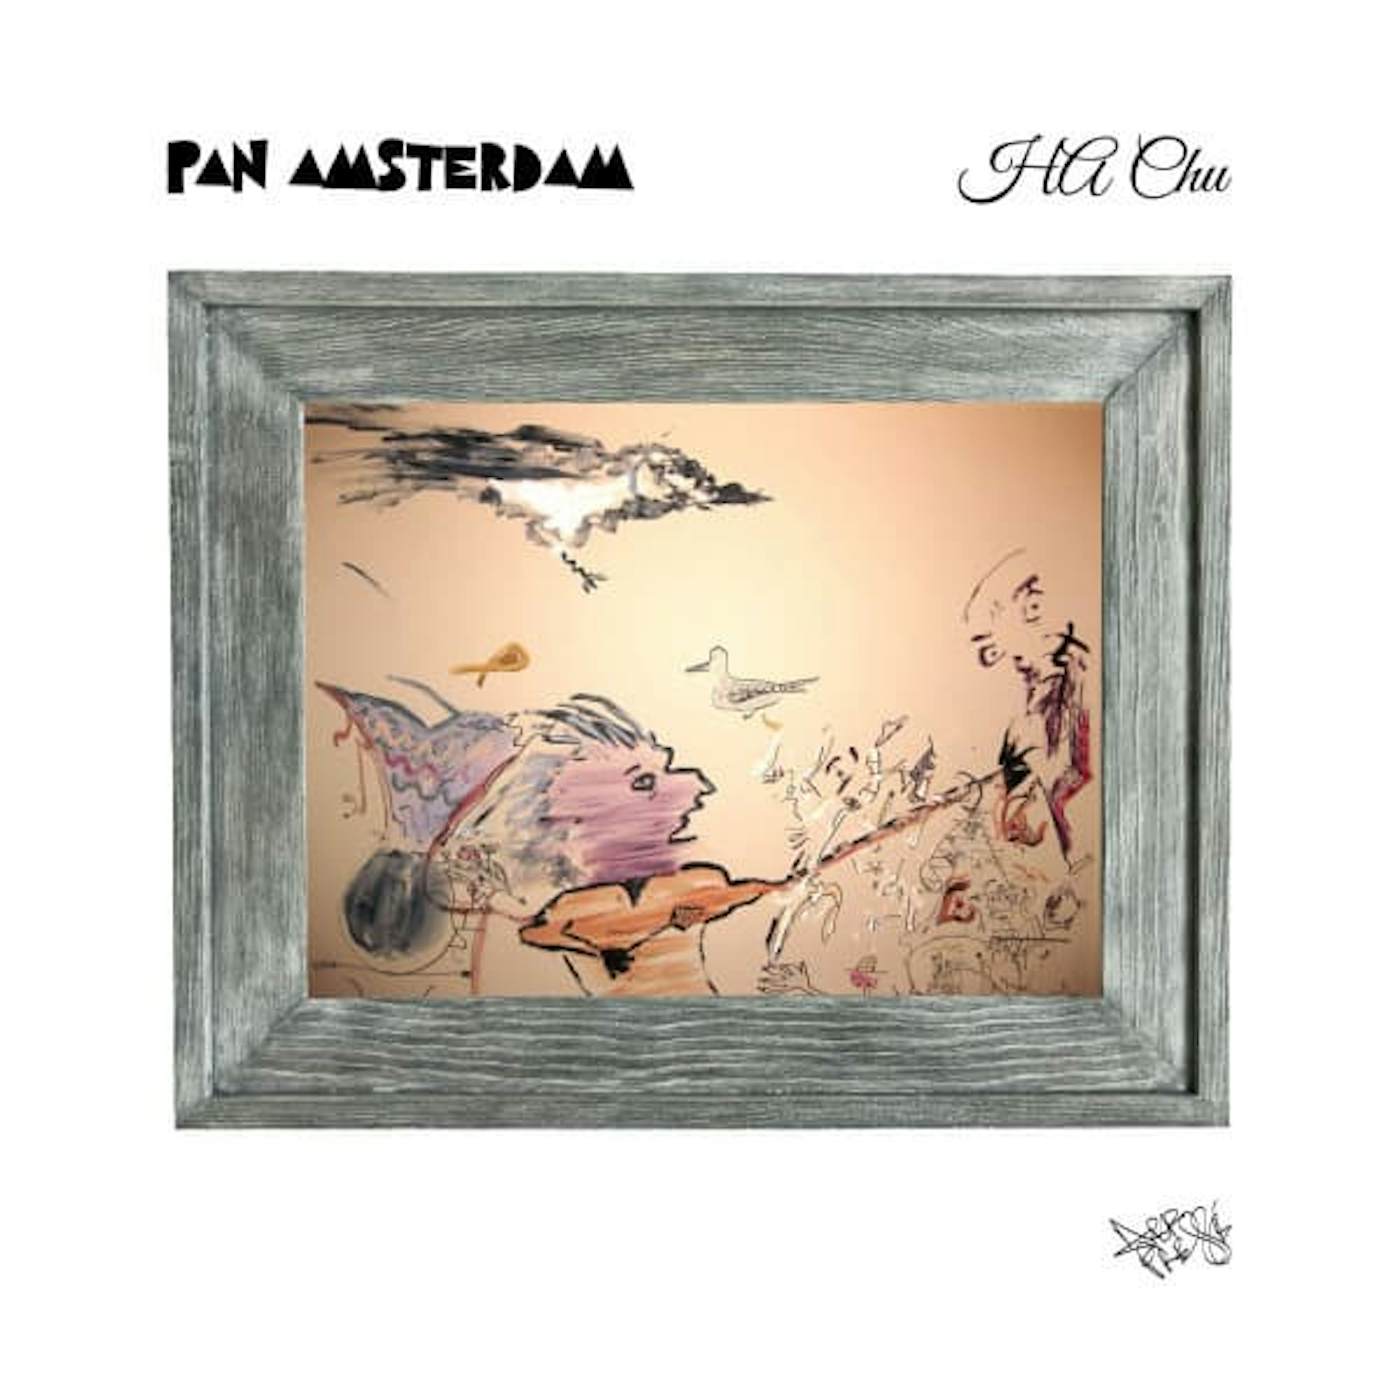 Pan Amsterdam Ha Chu Vinyl Record